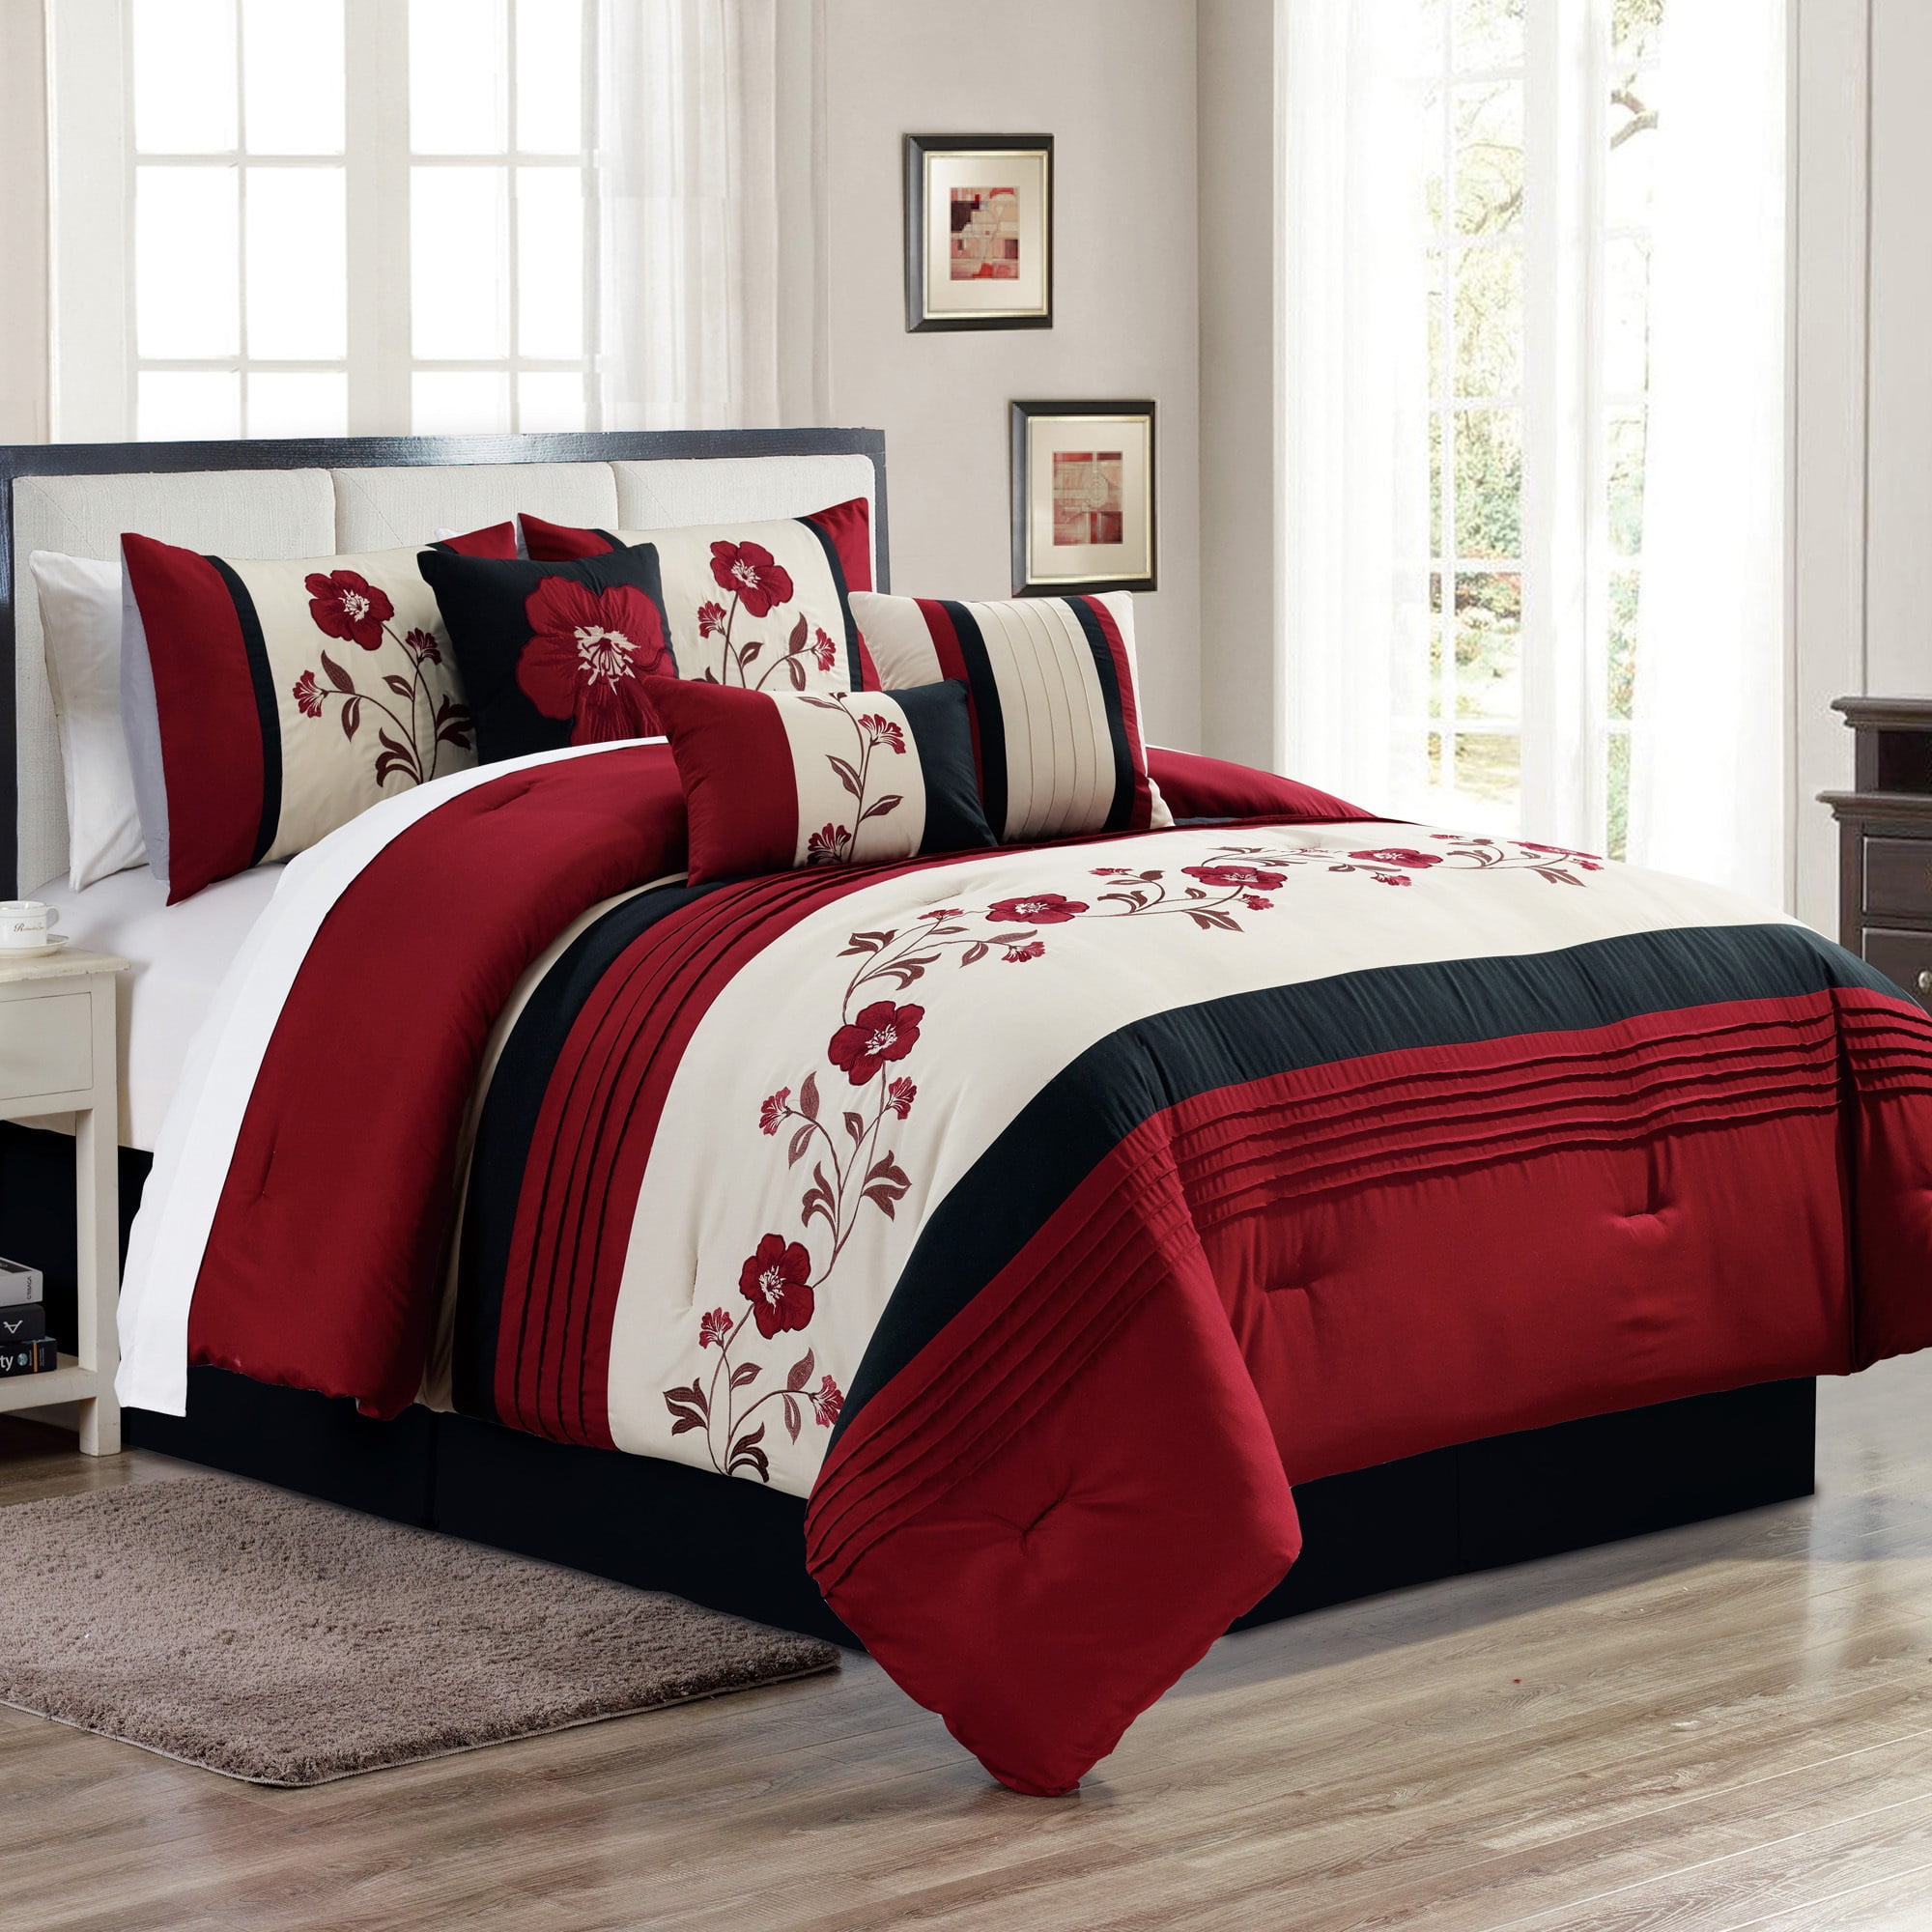 comforters bedding home